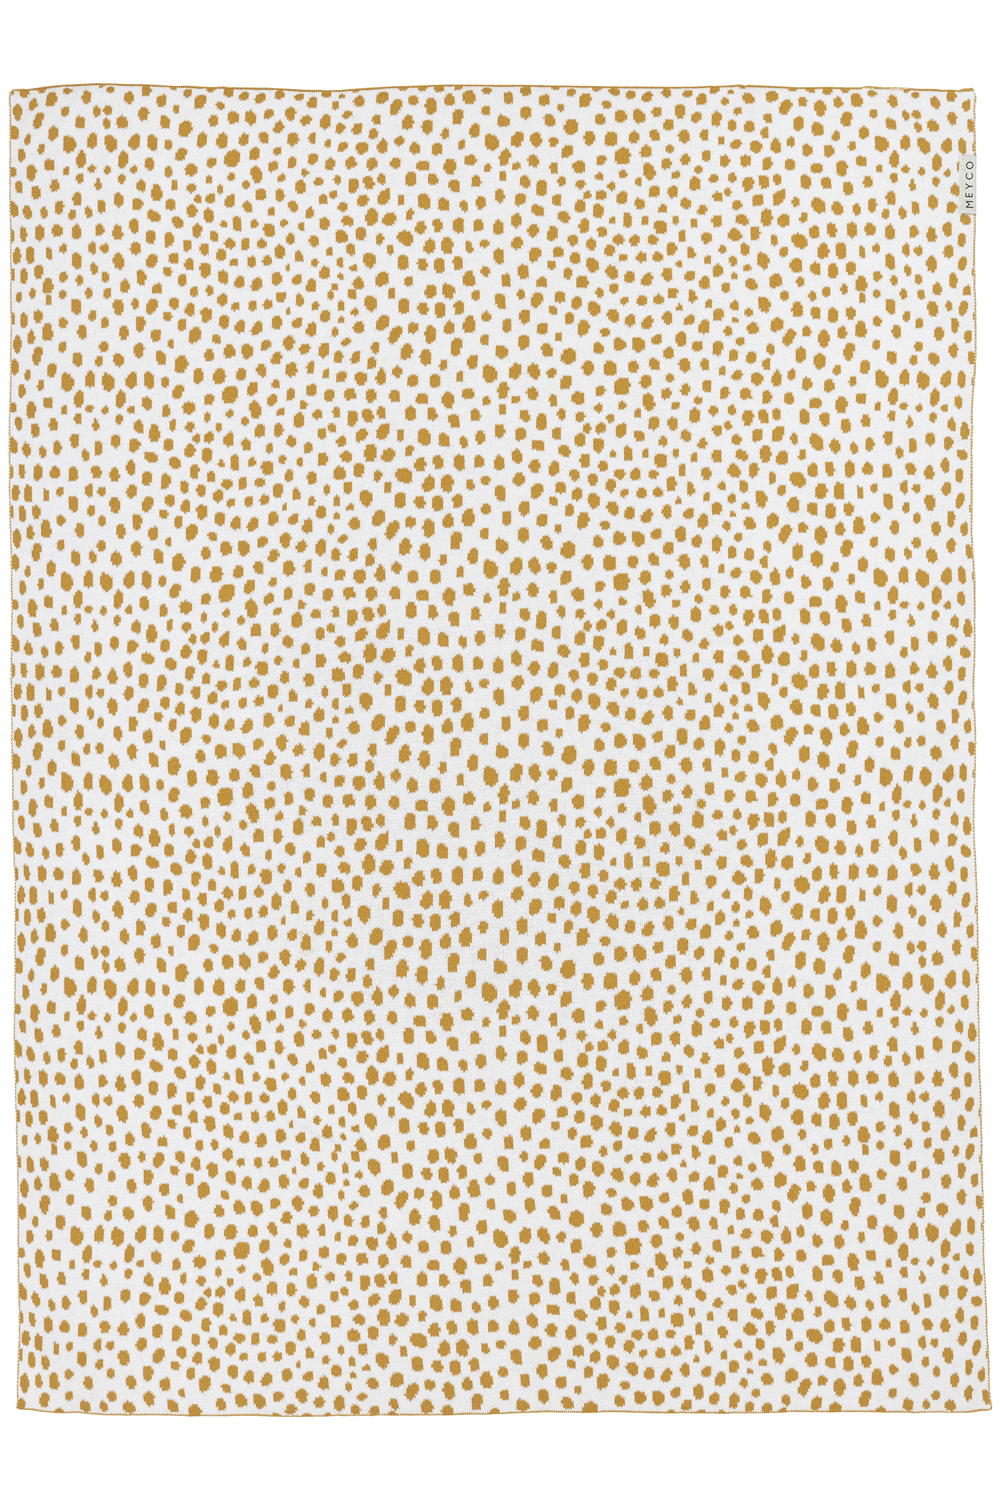 Babydecke groß Cheetah - honey gold - 100x150cm